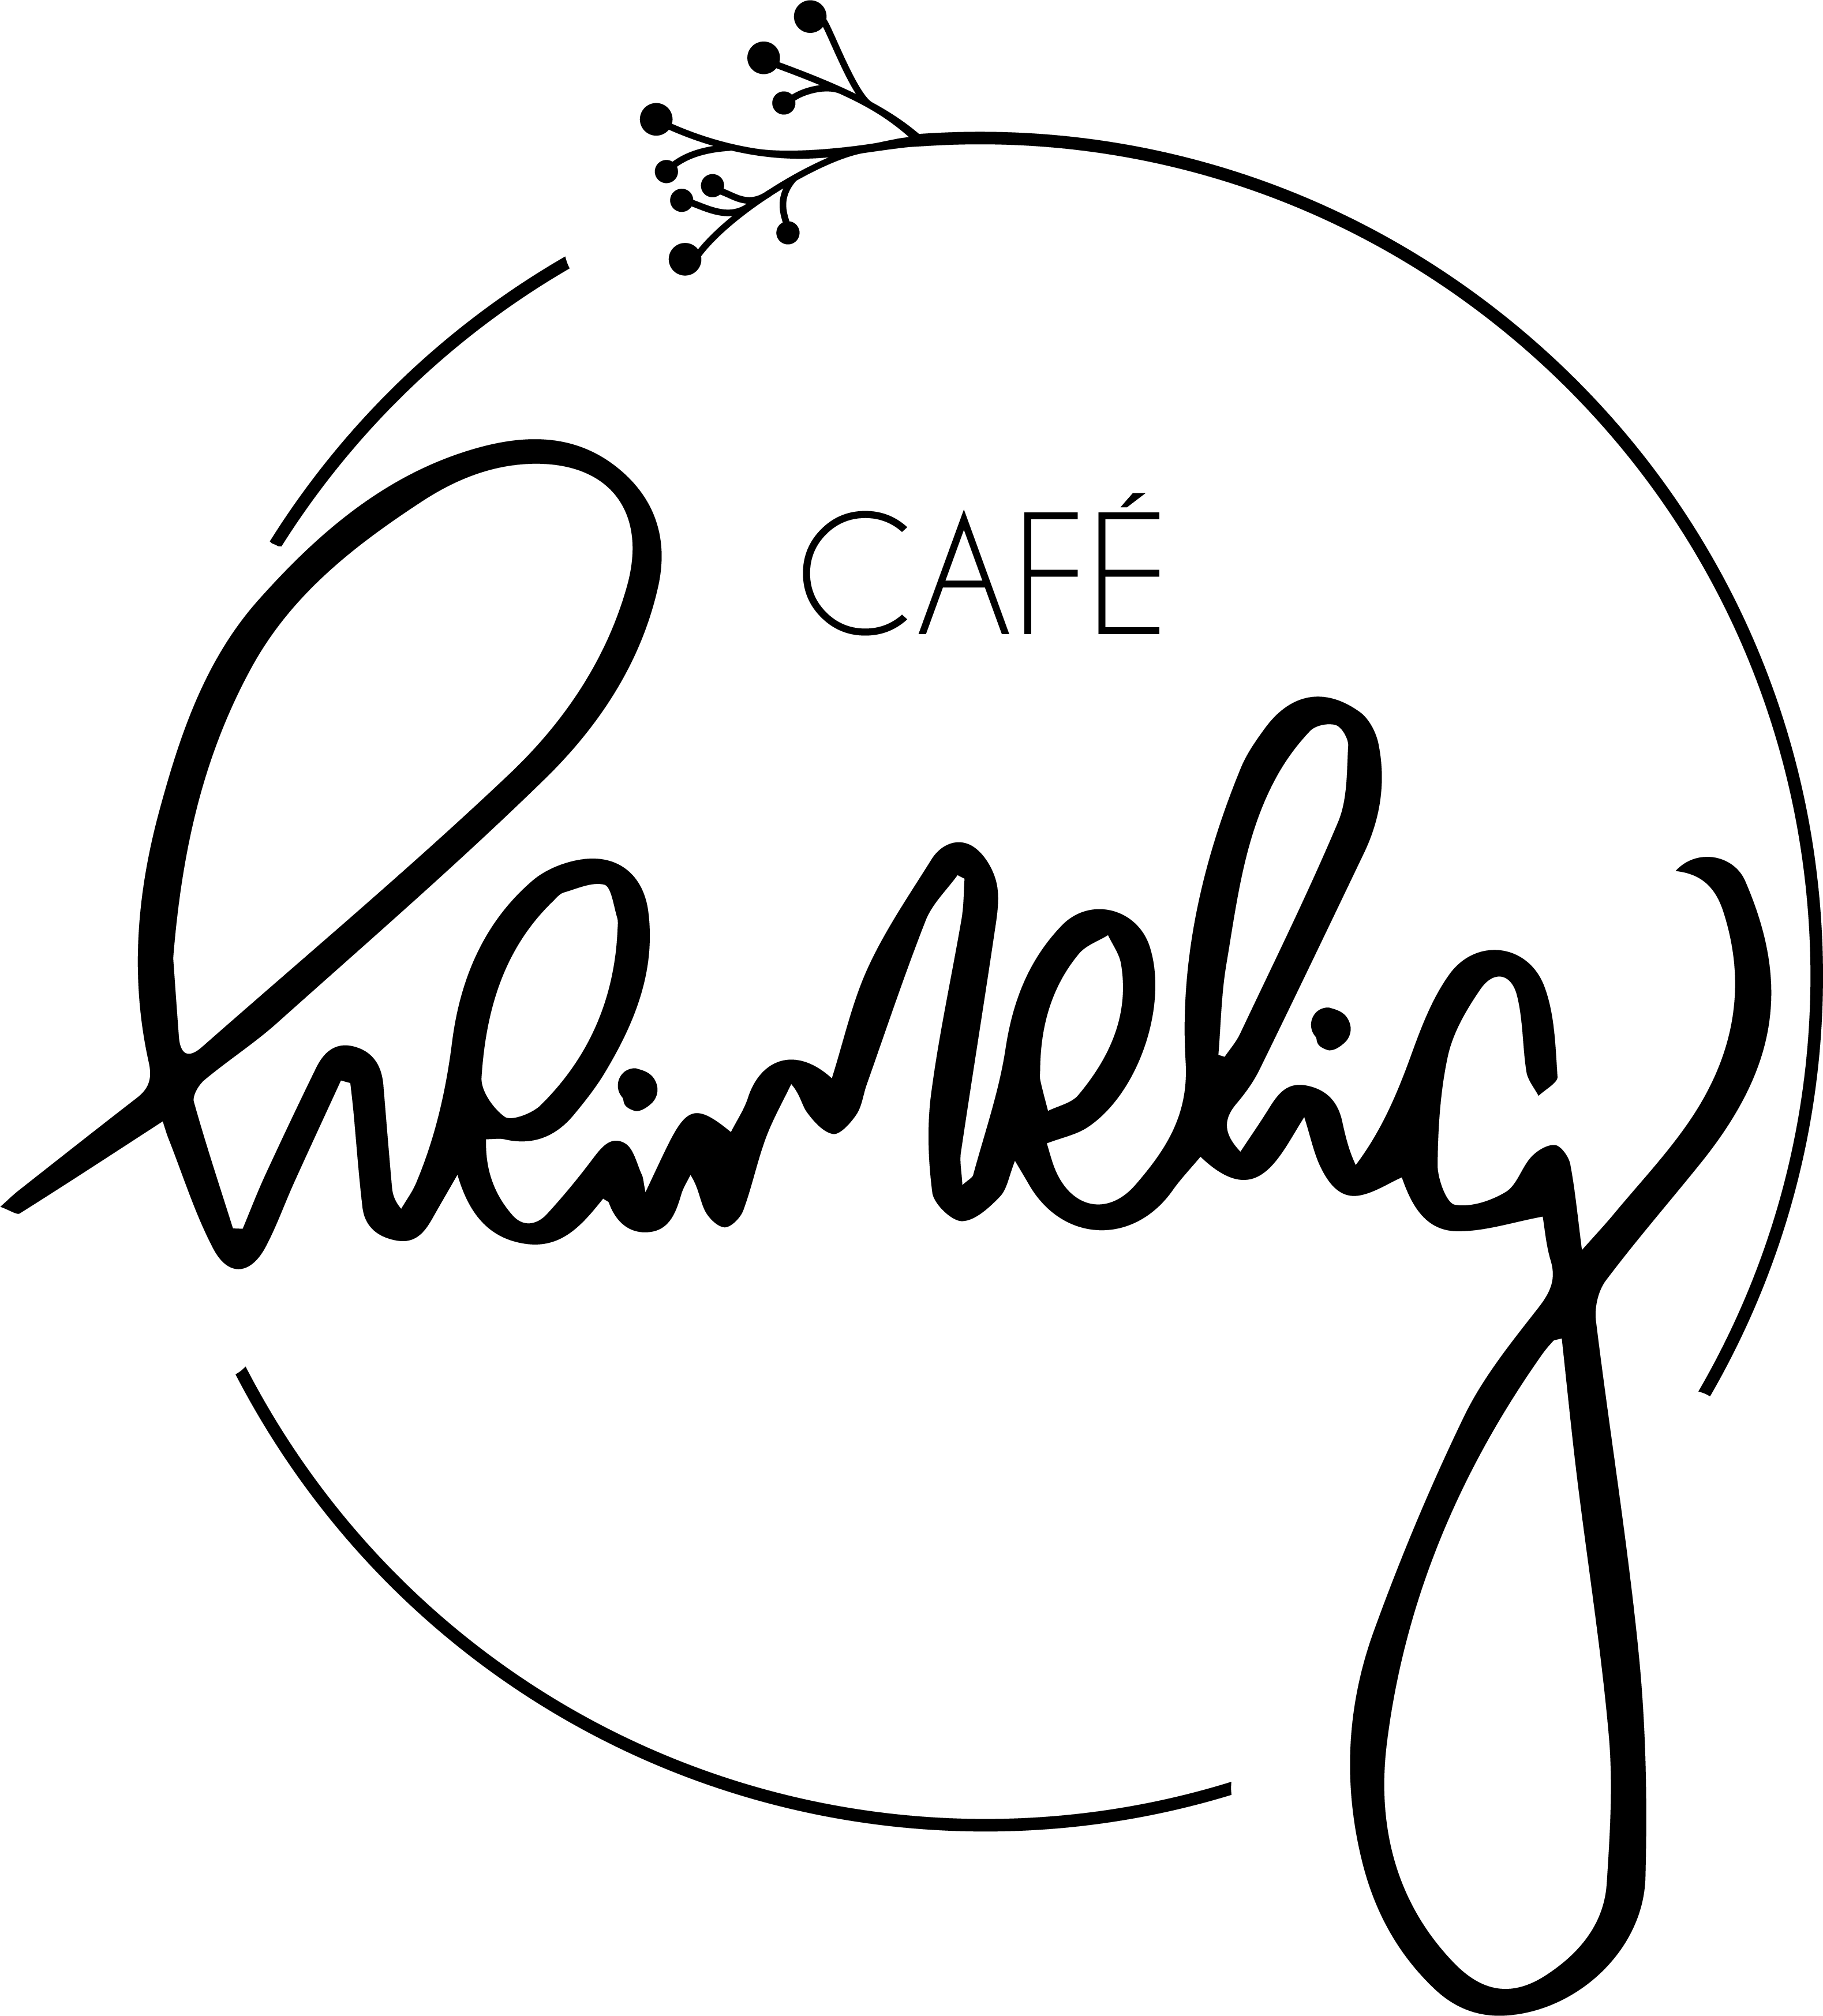 heimelig Logo schwarz